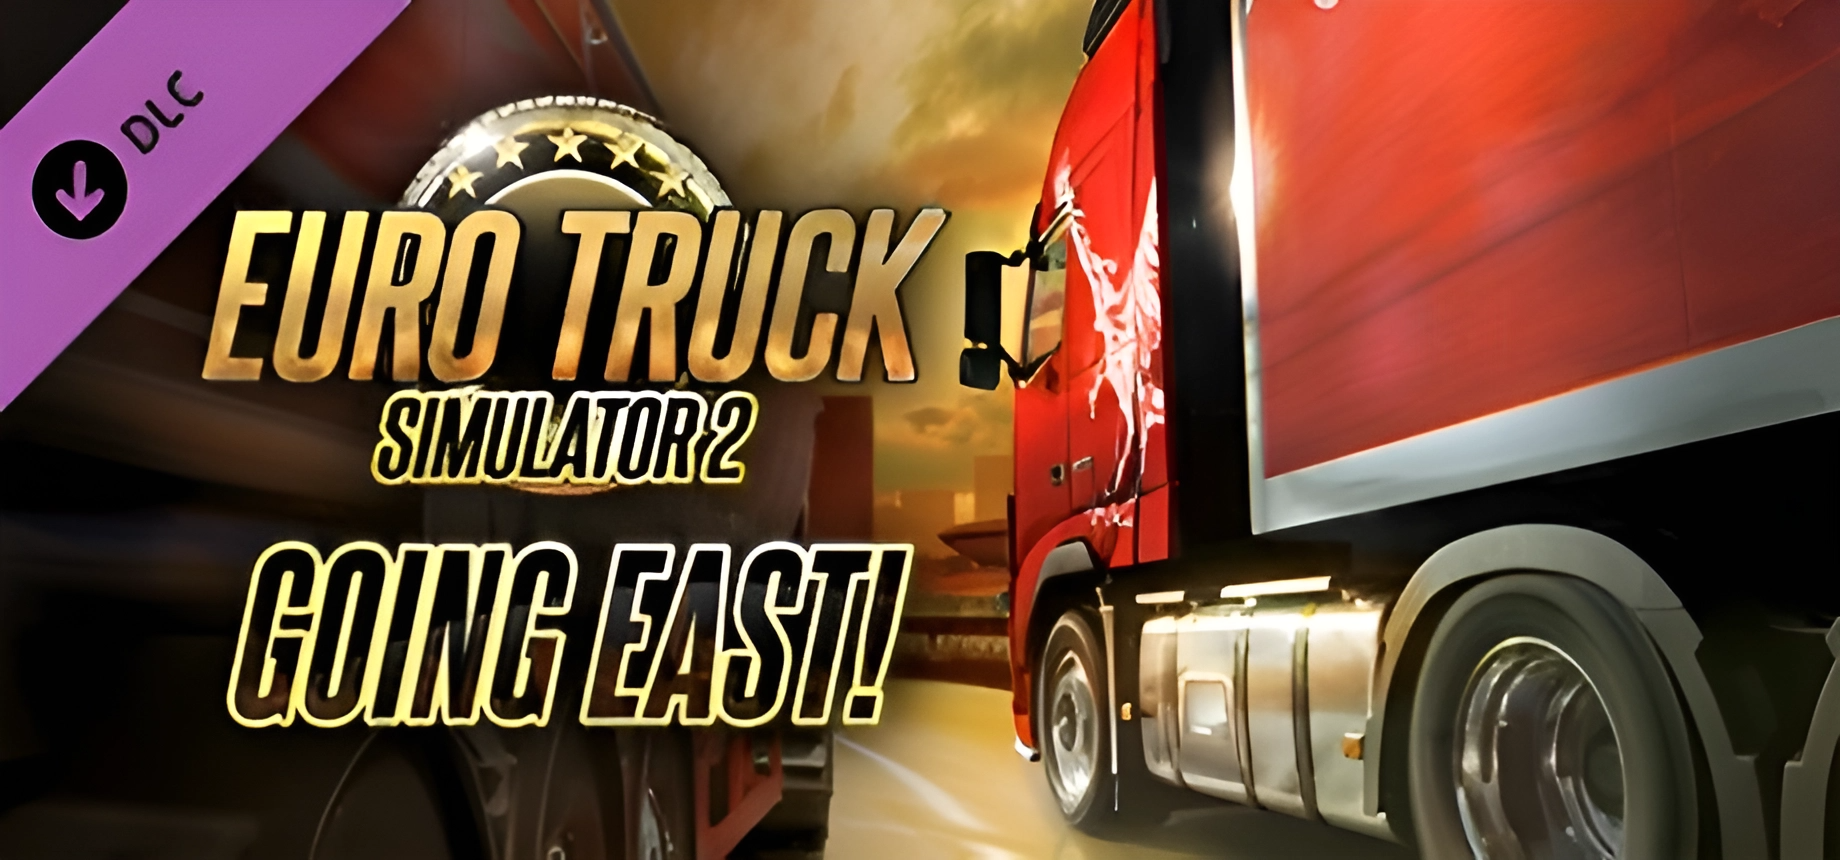 Euro Truck Simulator 2 - Going East DLC | Steam | РФ + СНГ